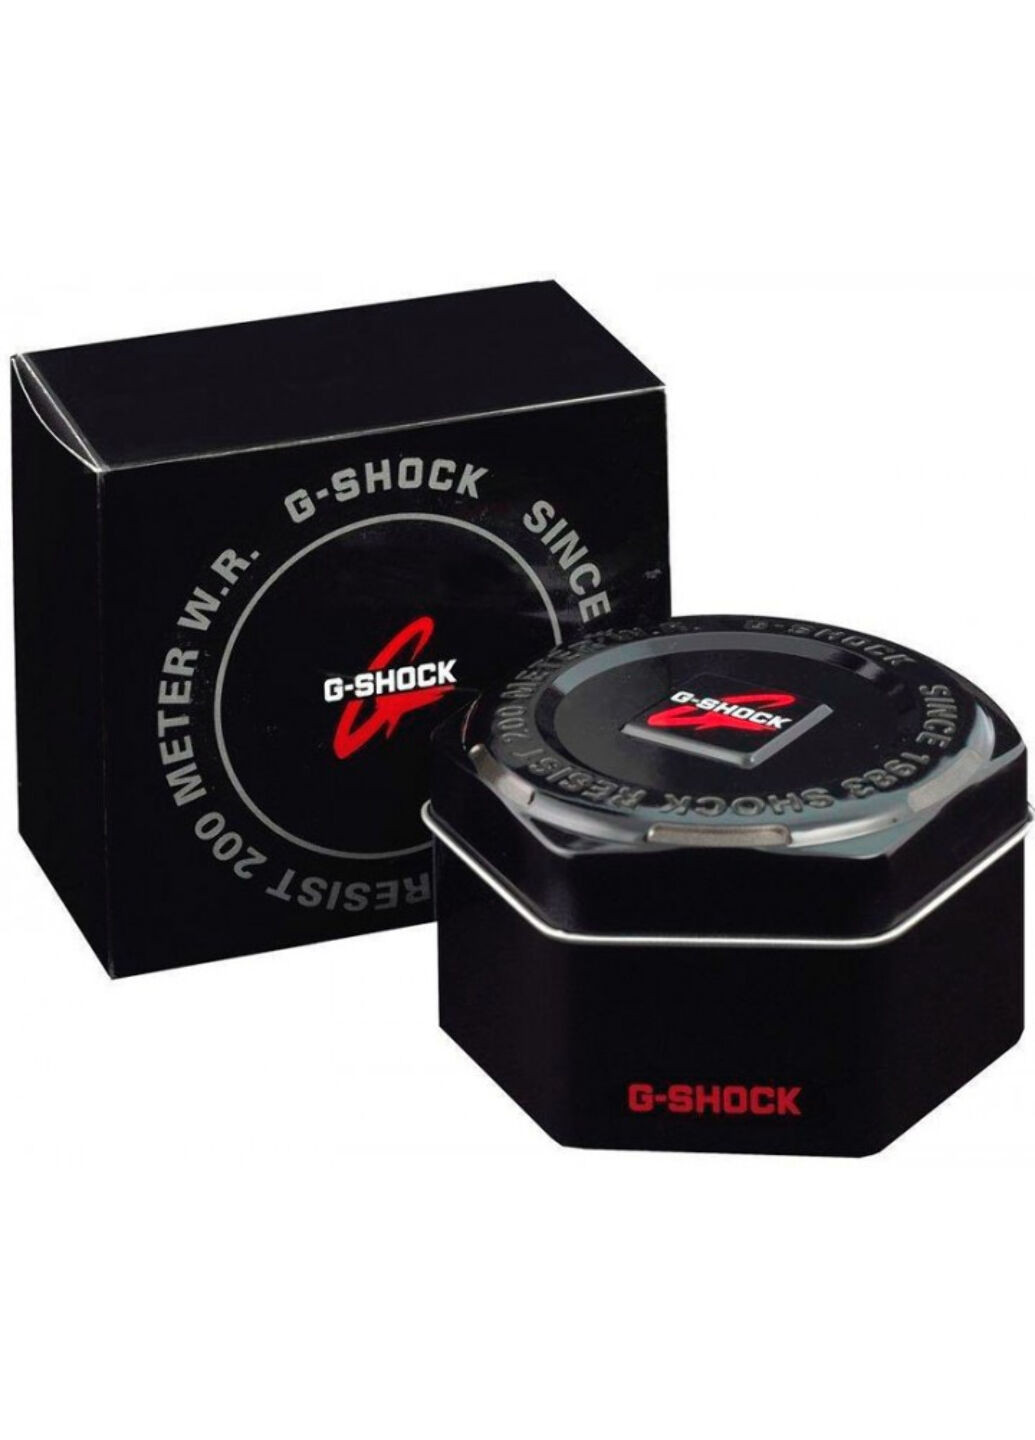 Наручний годинник Casio glx-5600rt-9er (272128456)